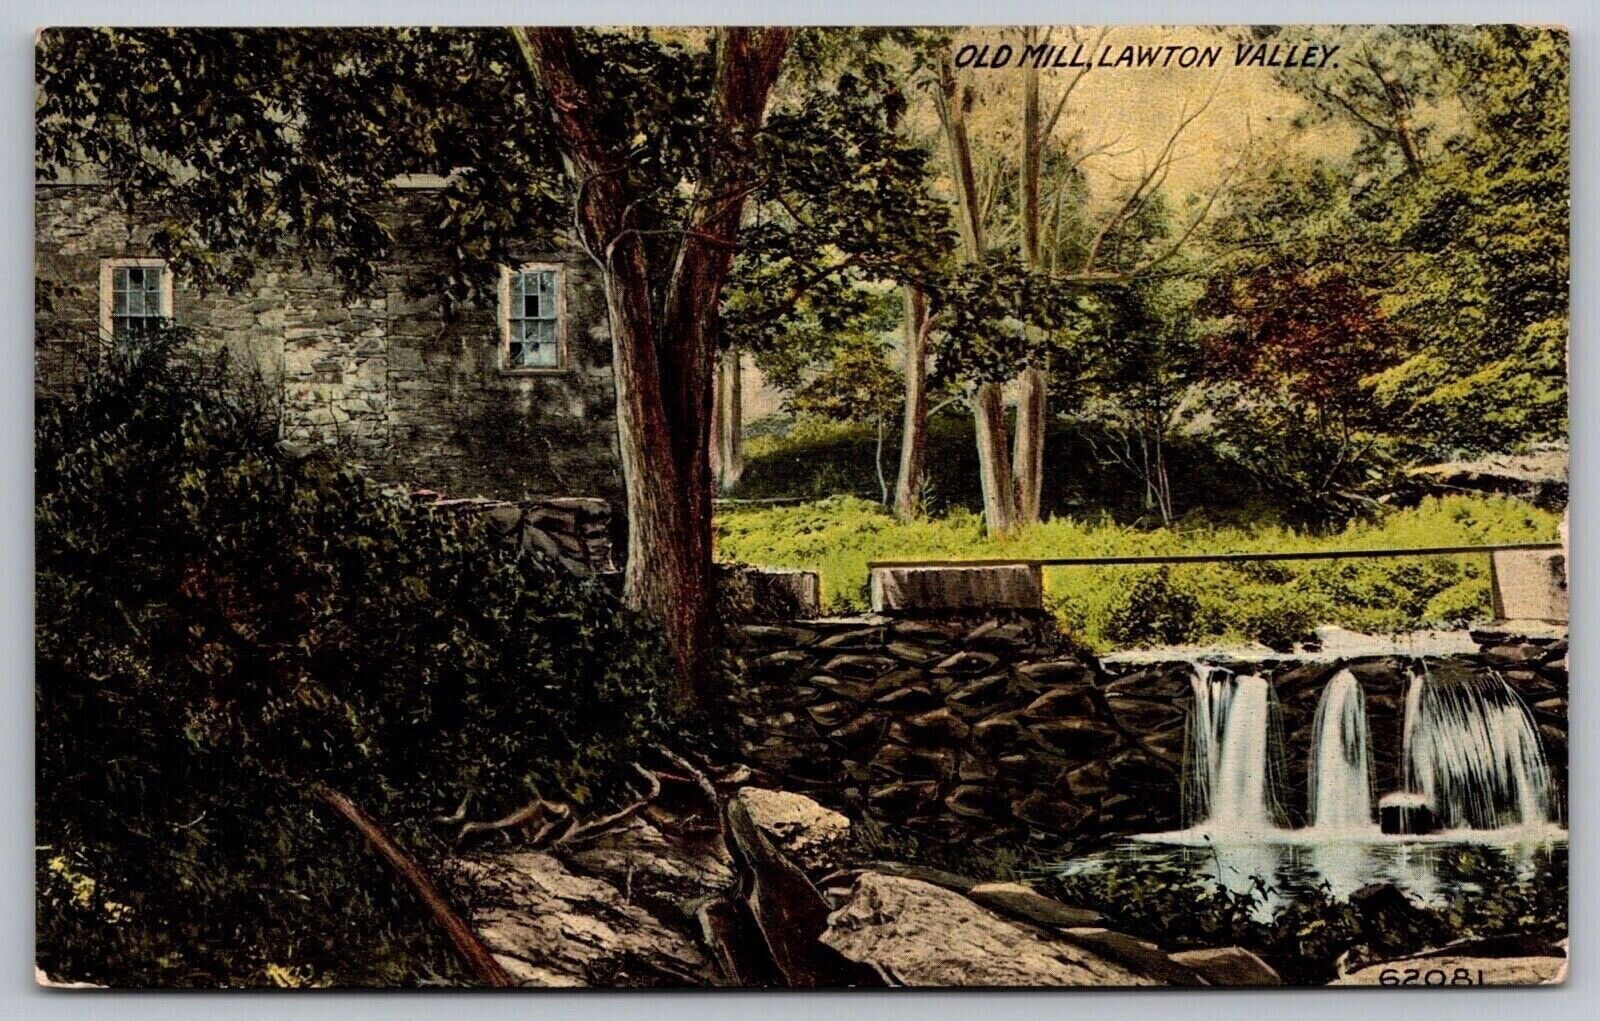 Lawton Valley Pennsylvania Old Mill Historic Landmark Scenic DB Postcard